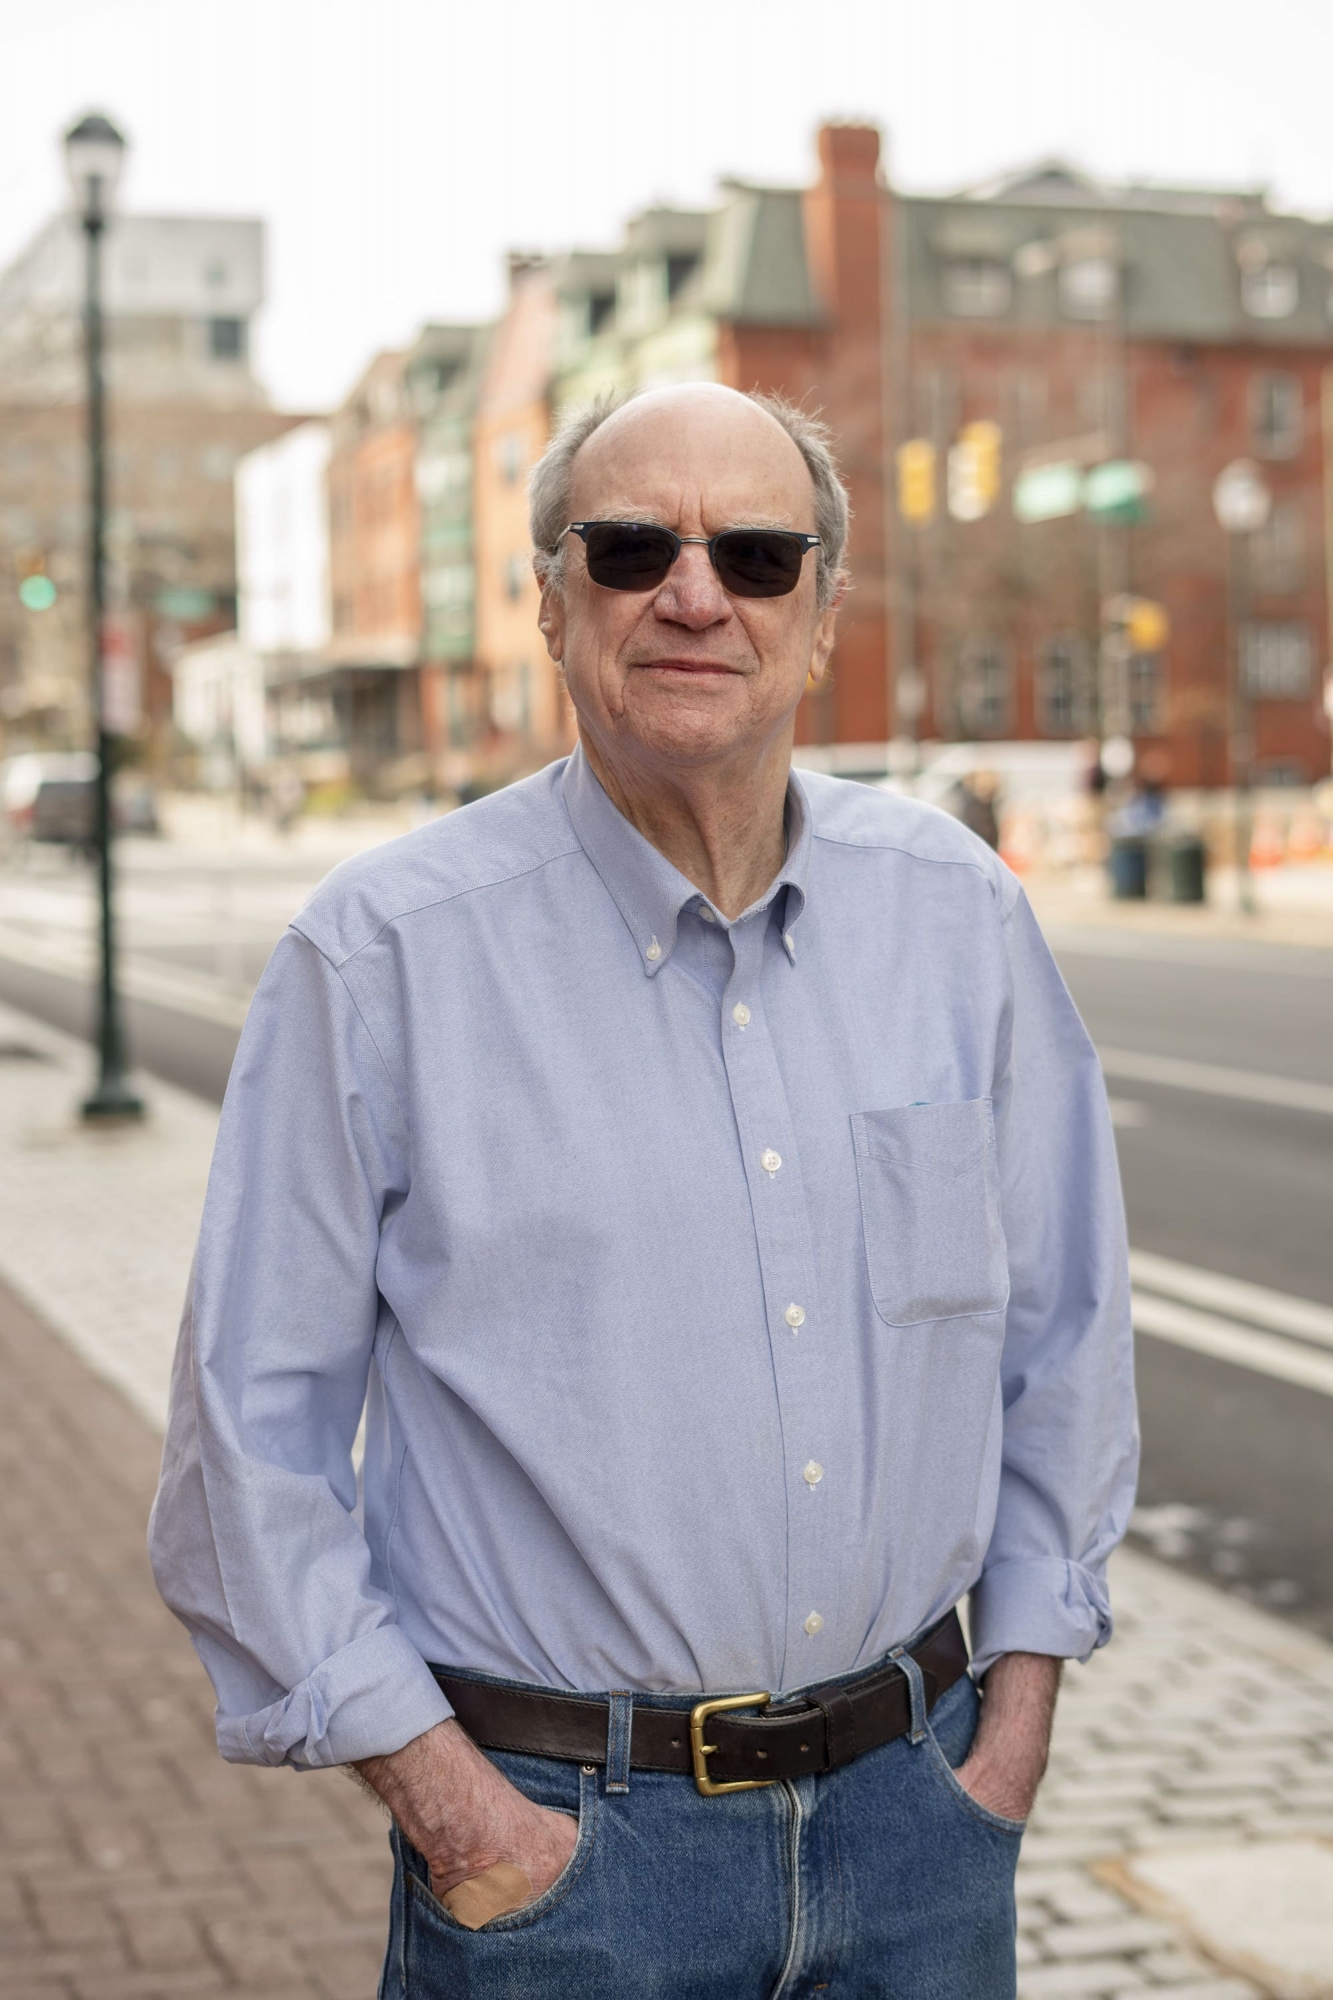 Penn GSE Professor Emeritus <span>John Puckett stands along Walnut Street in West Philadelphia</span>